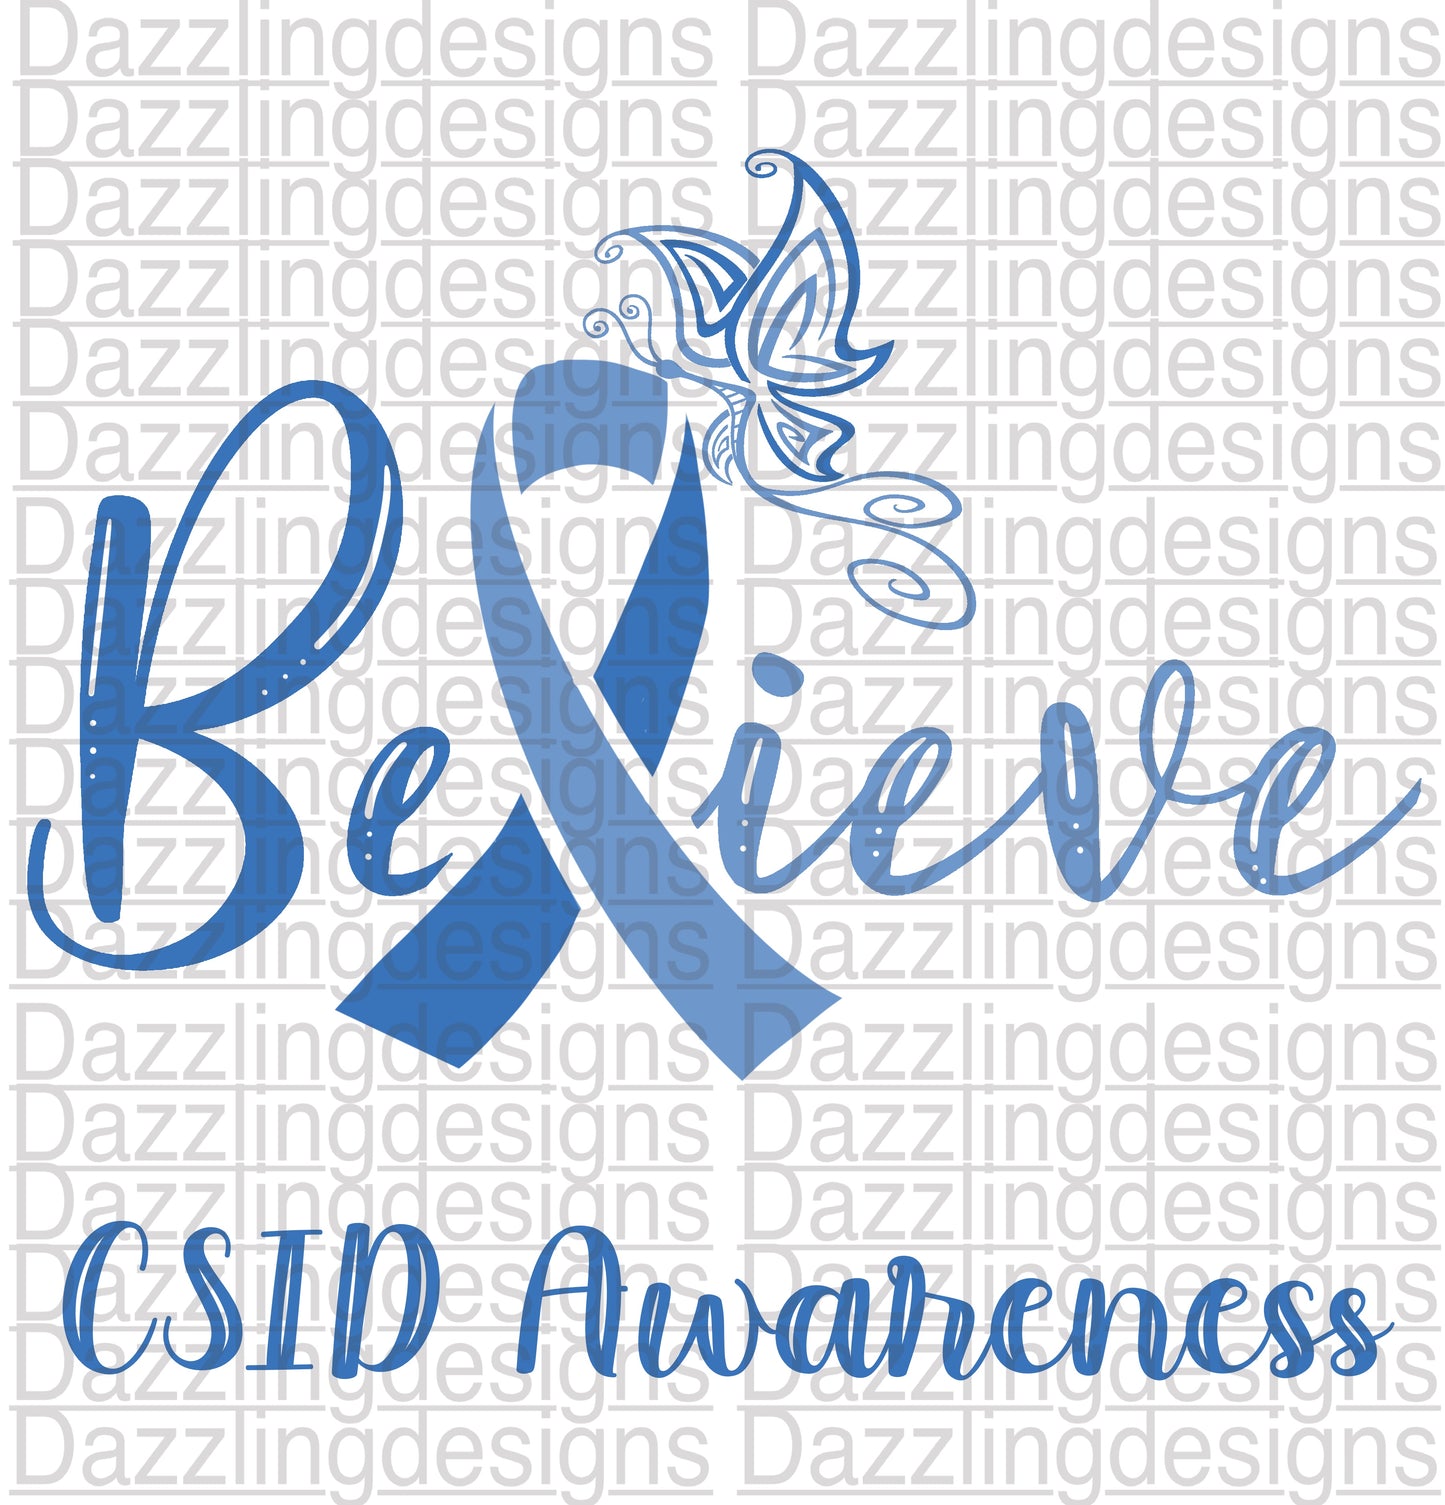 CSID Awareness